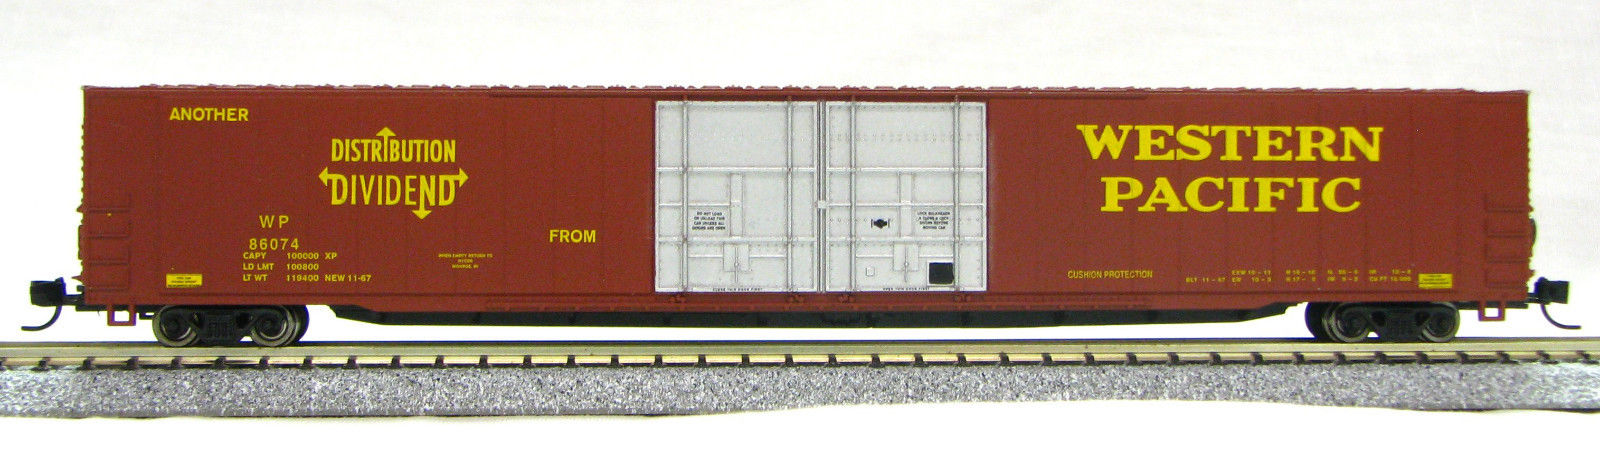 N Scale - Con-Cor - 0001-14665 - Boxcar, 85 or 86 Foot, Auto Parts - Western Pacific - 86058